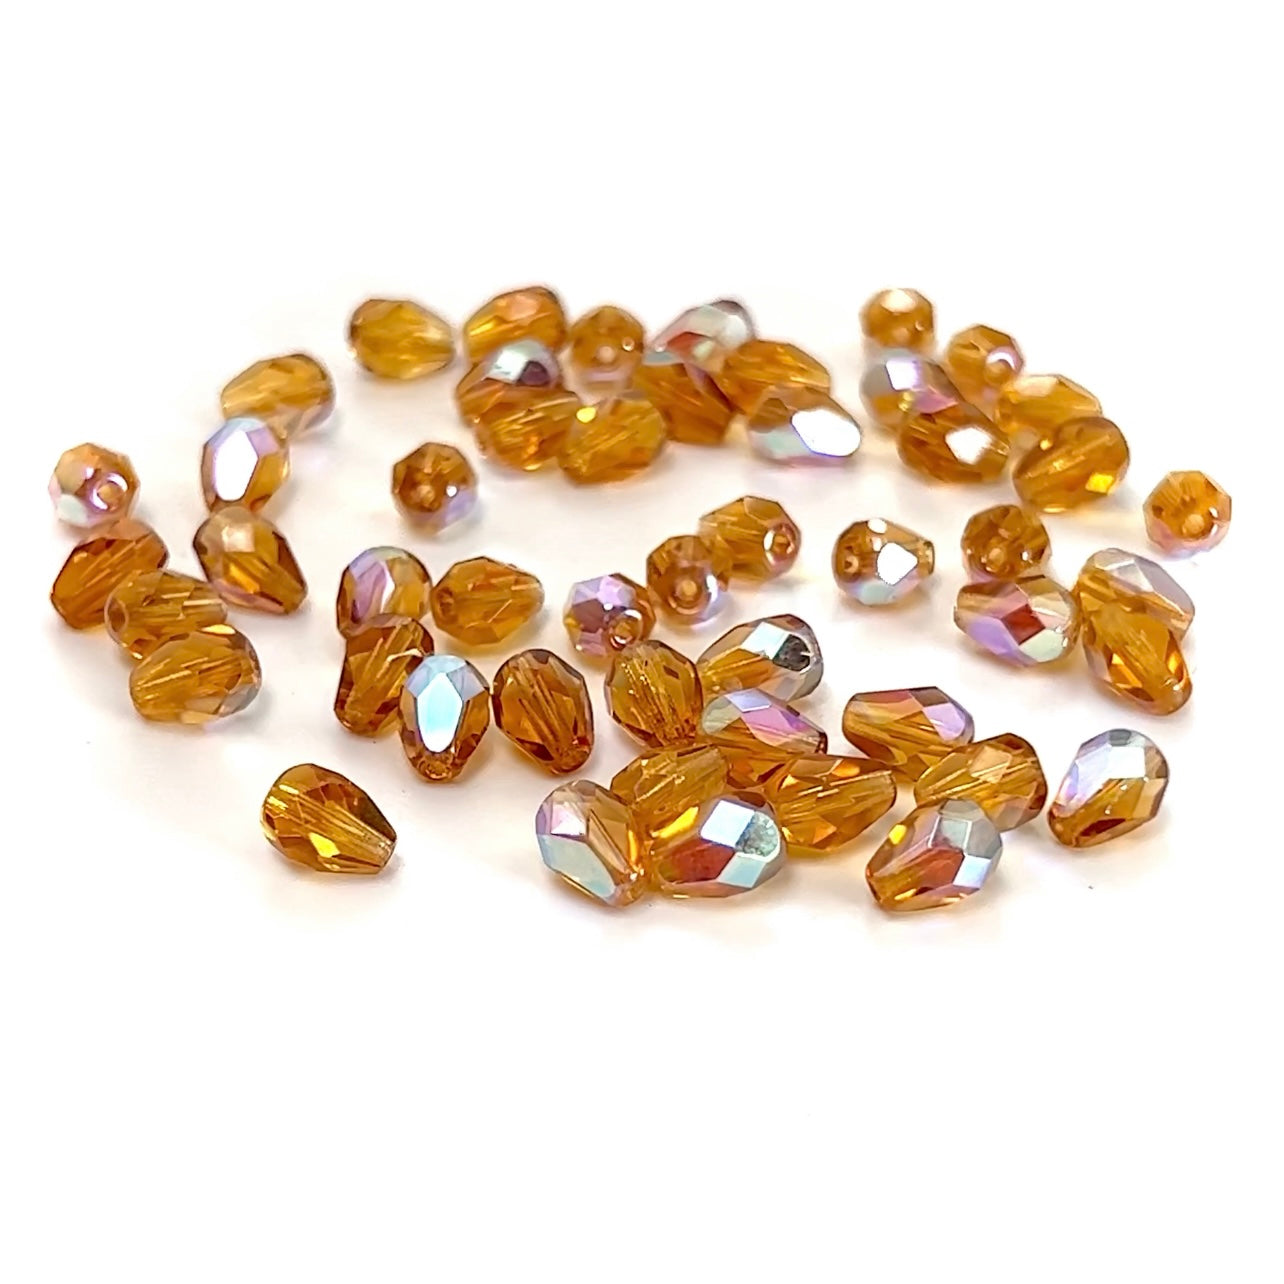 Czech Glass Pear Shaped Fire Polished Beads 8x6mm Topaz AB coated brown Tear Drops, 50 pieces, J017